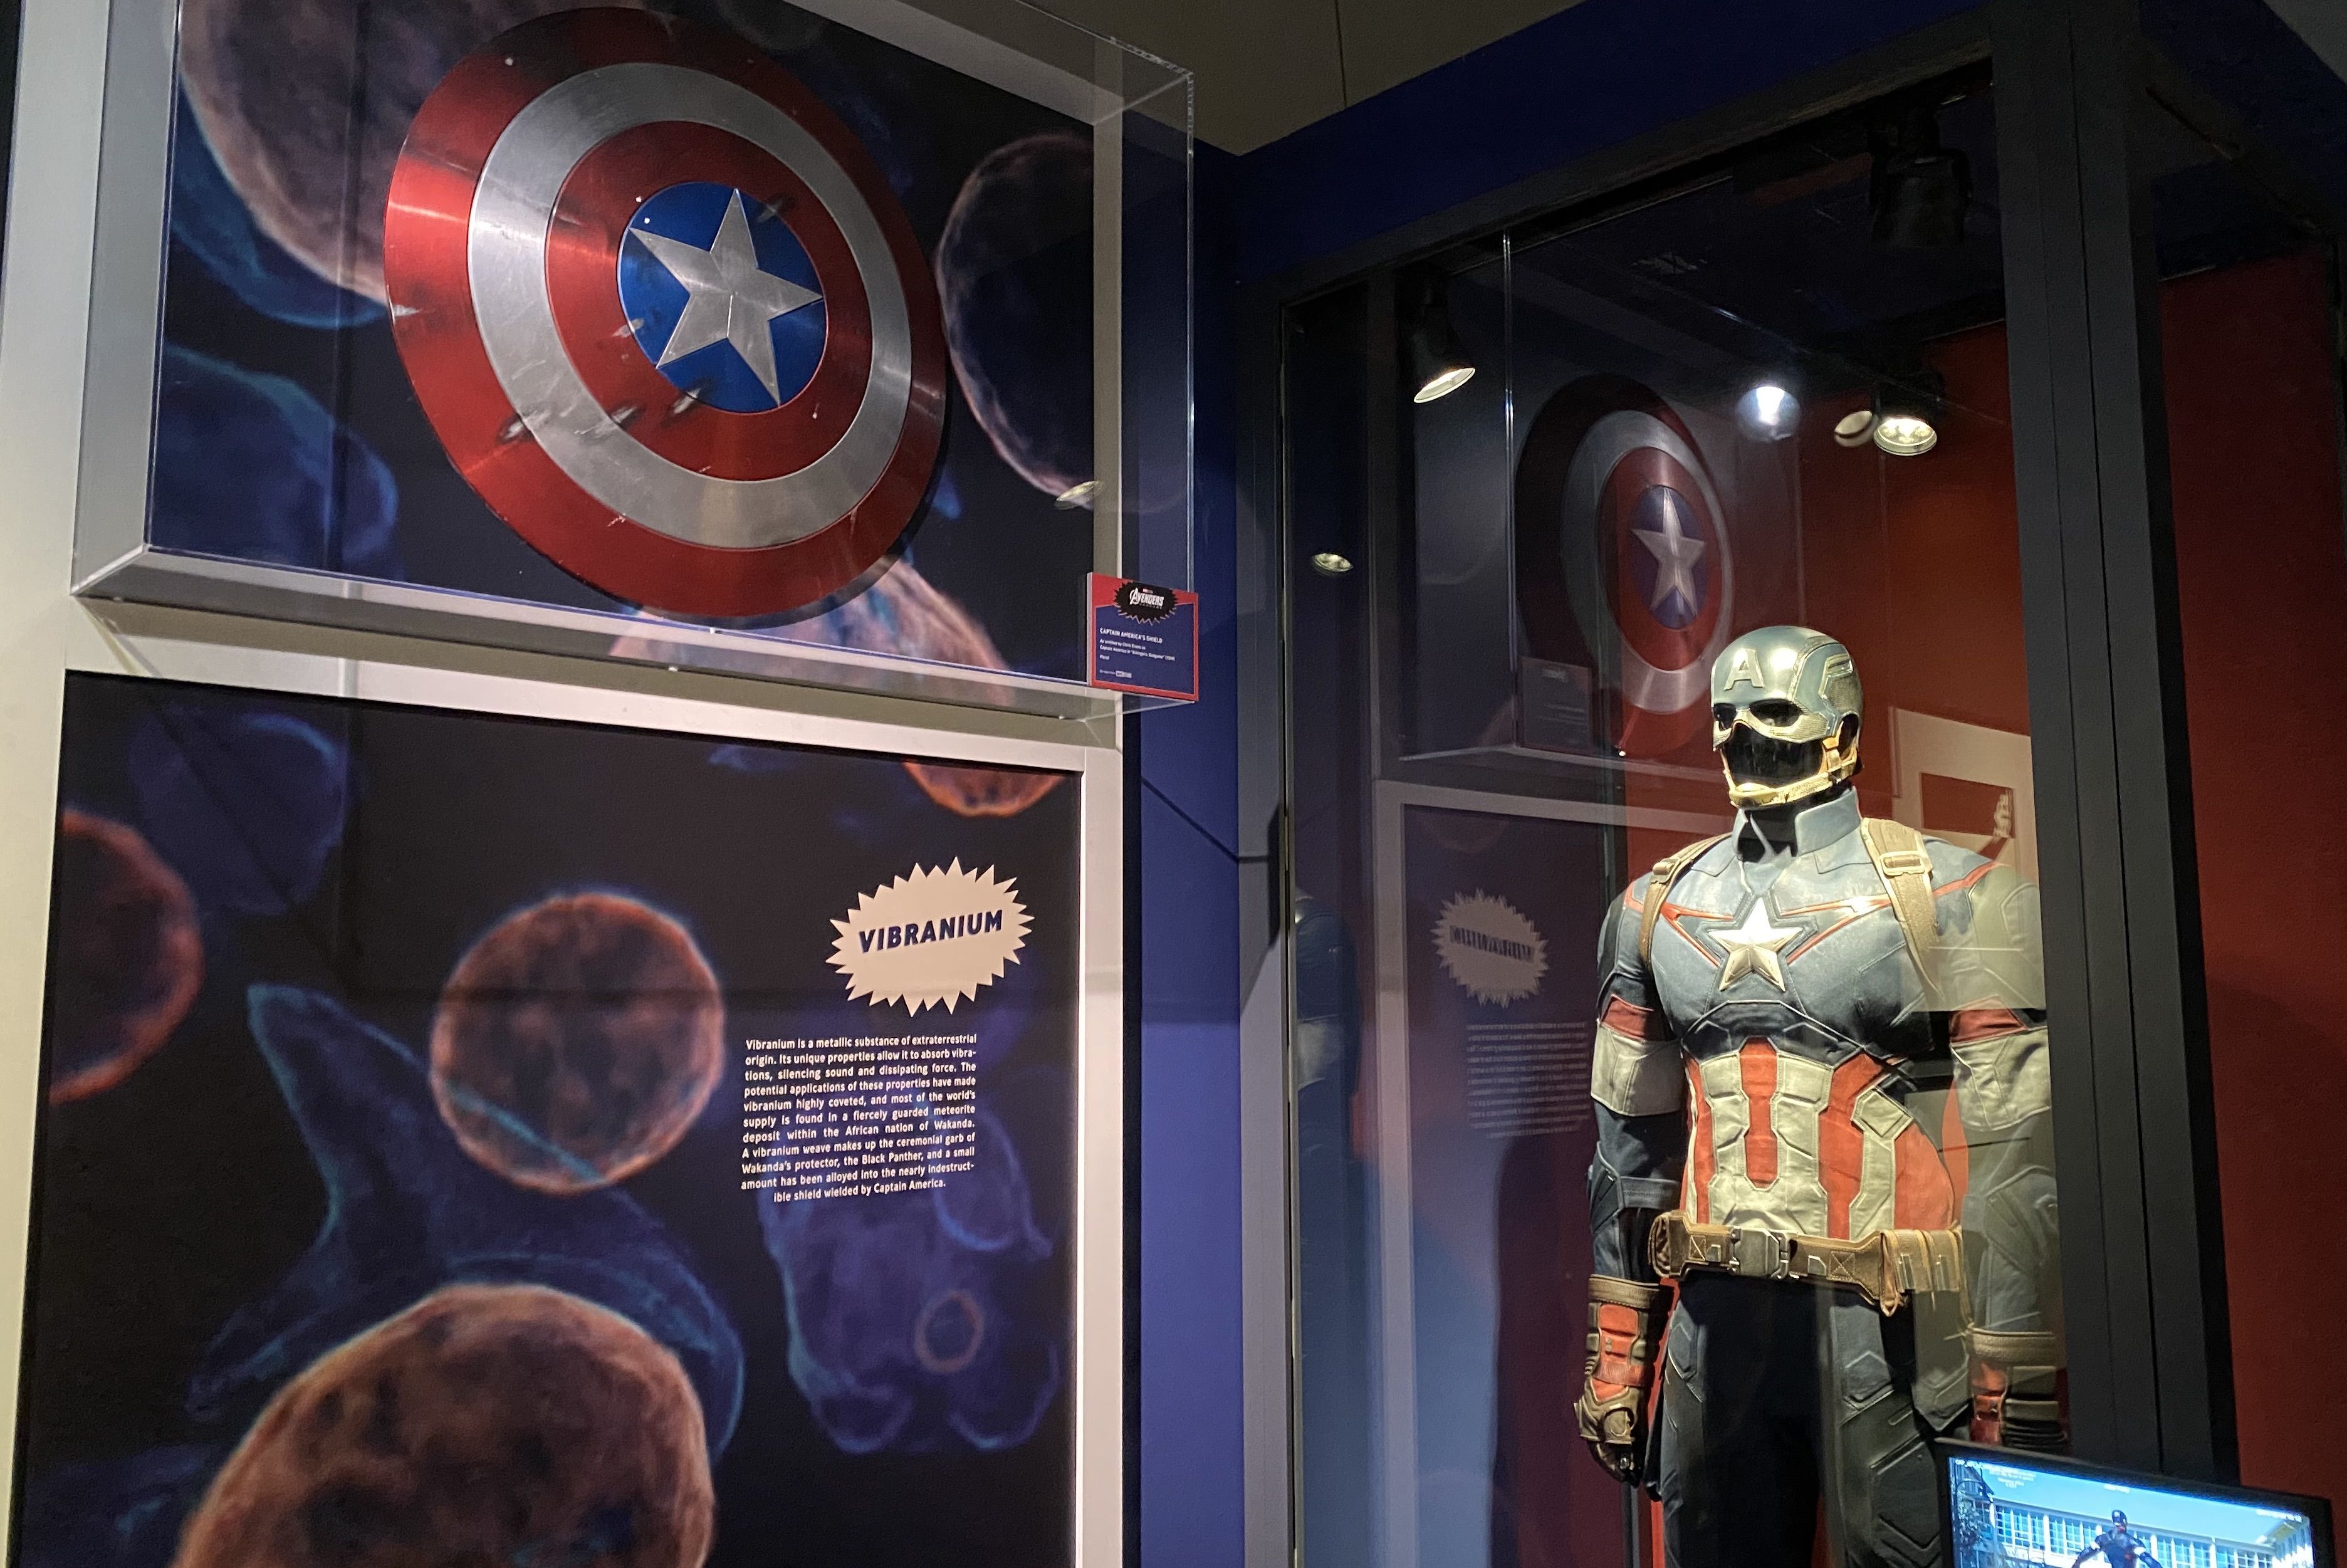 A Captain America costume and shield exhibit